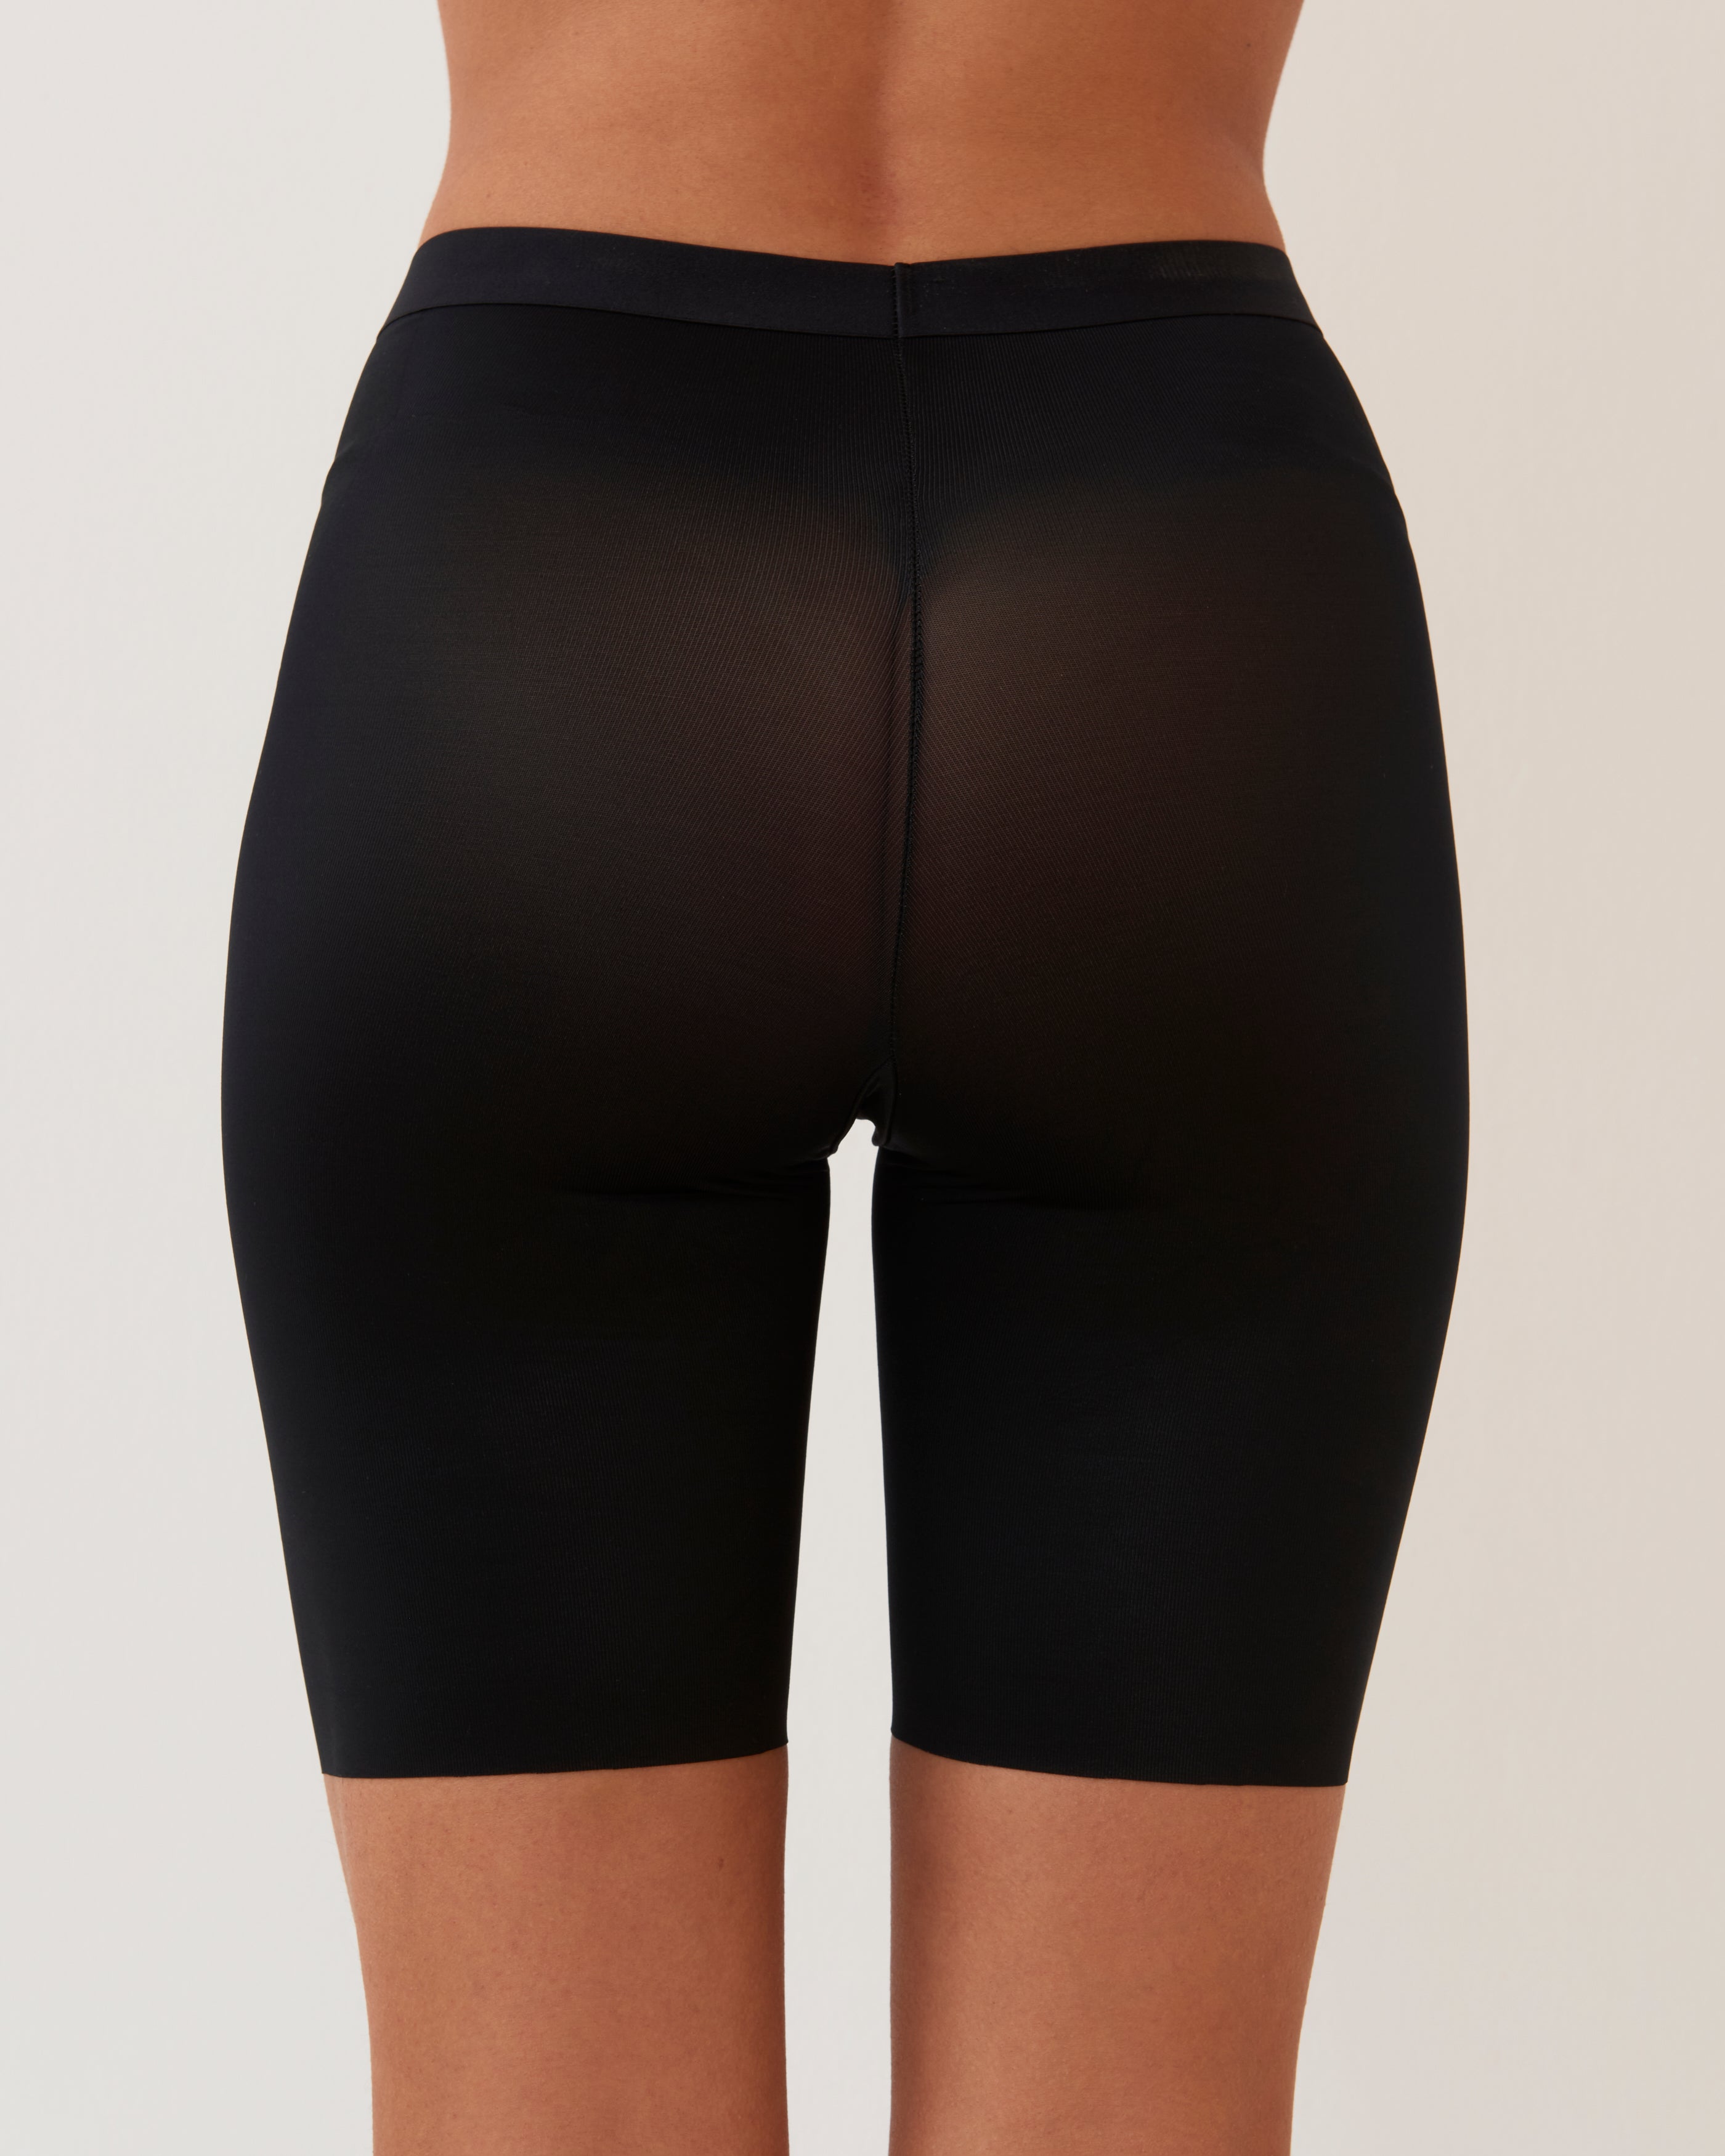 Slimming Black Shorts by SPANX